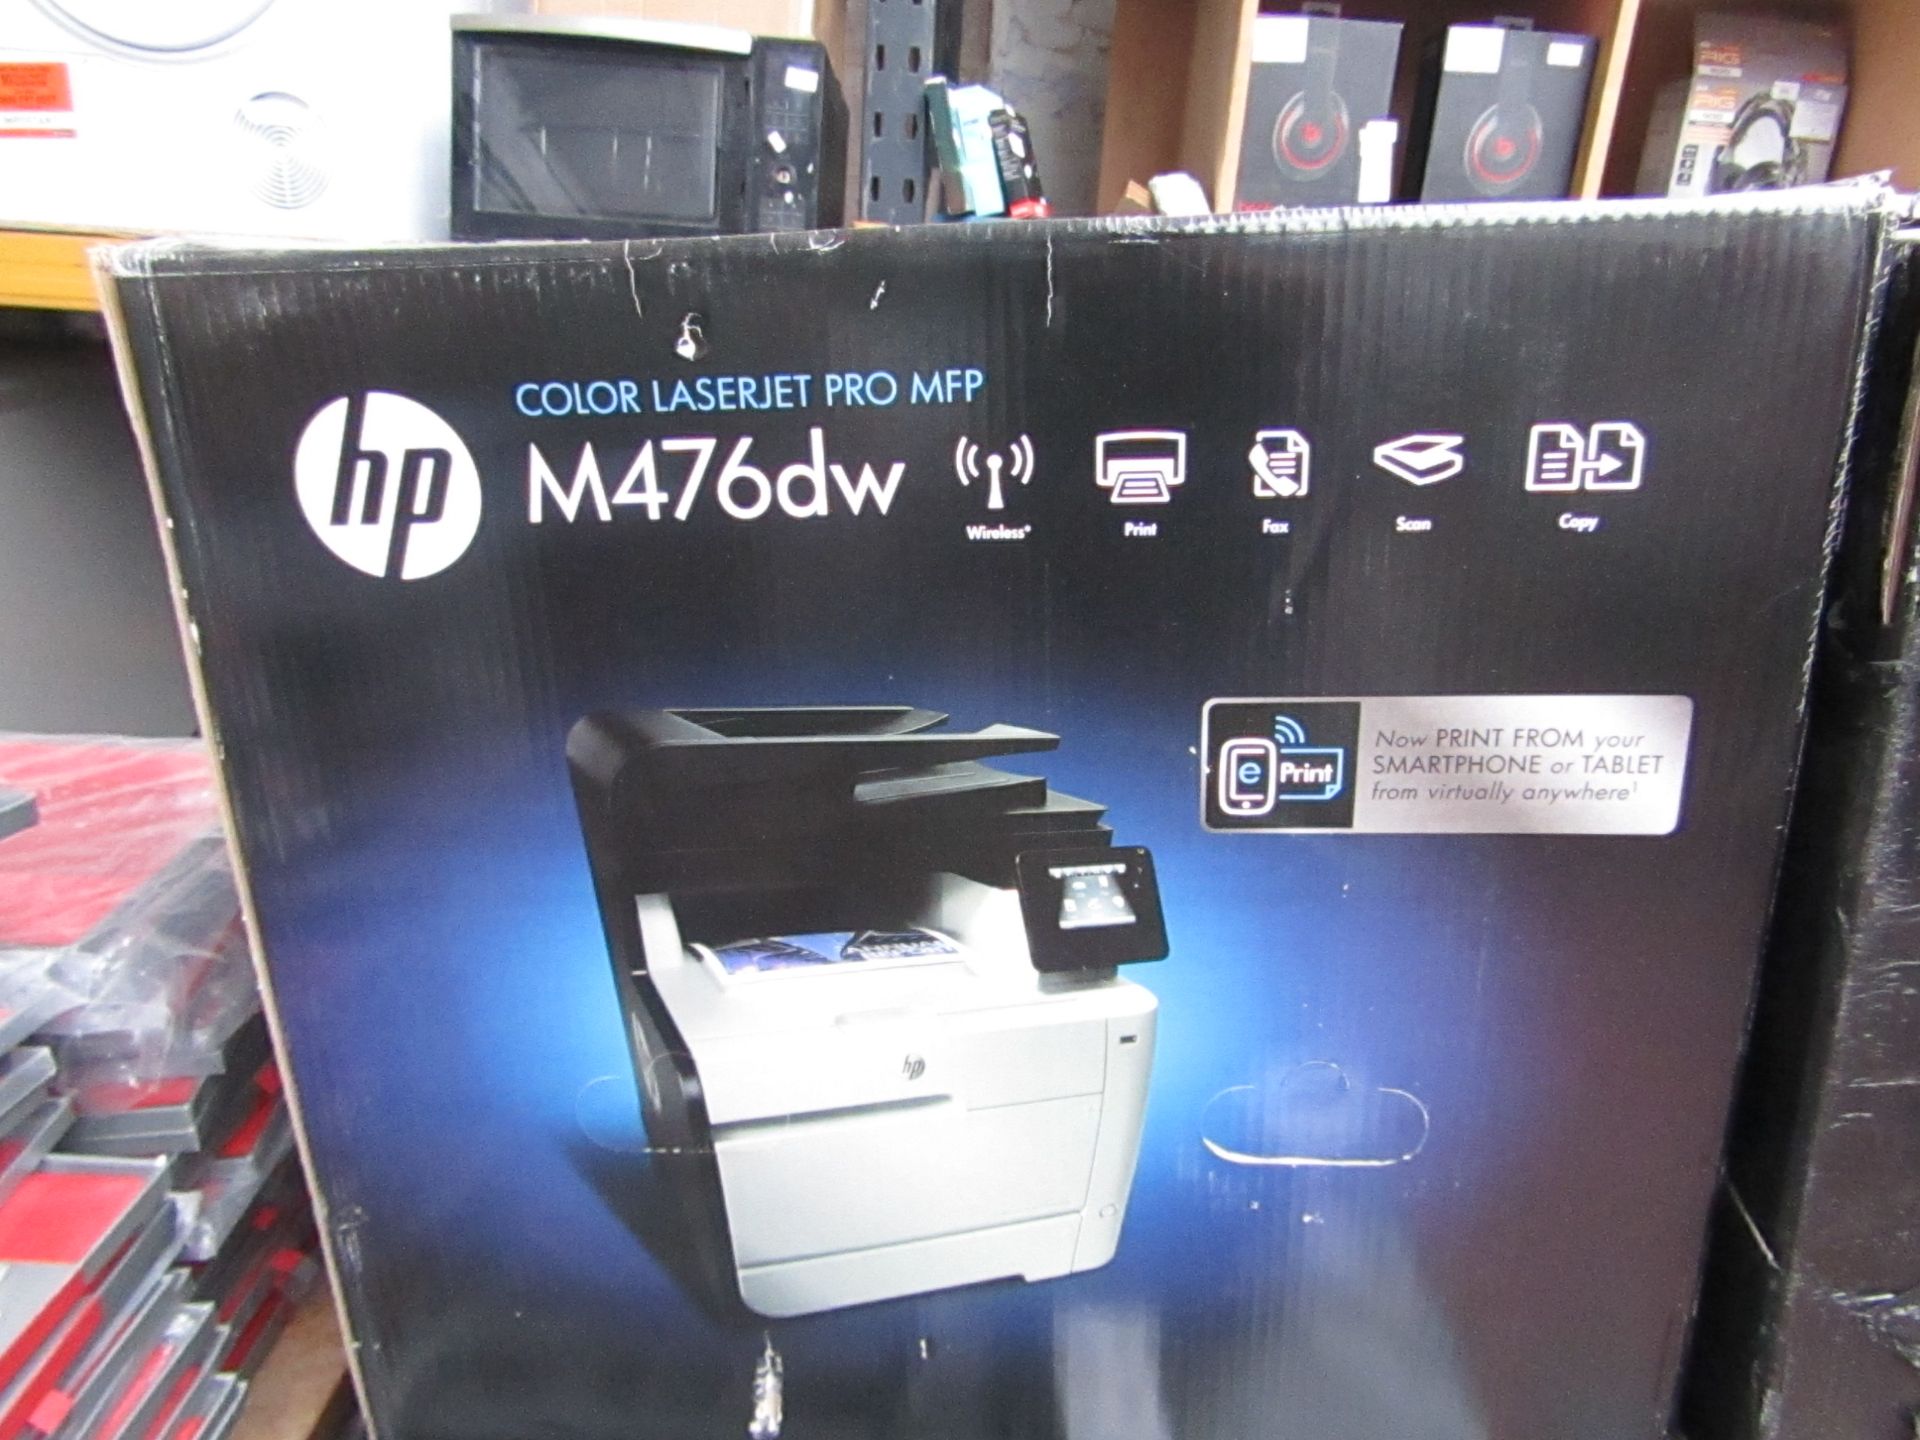 HP M476dw colour LaserJet pro MFP 600 x 600 DPI 20 ppm A4 Wi-Fi printer, powers on but not all